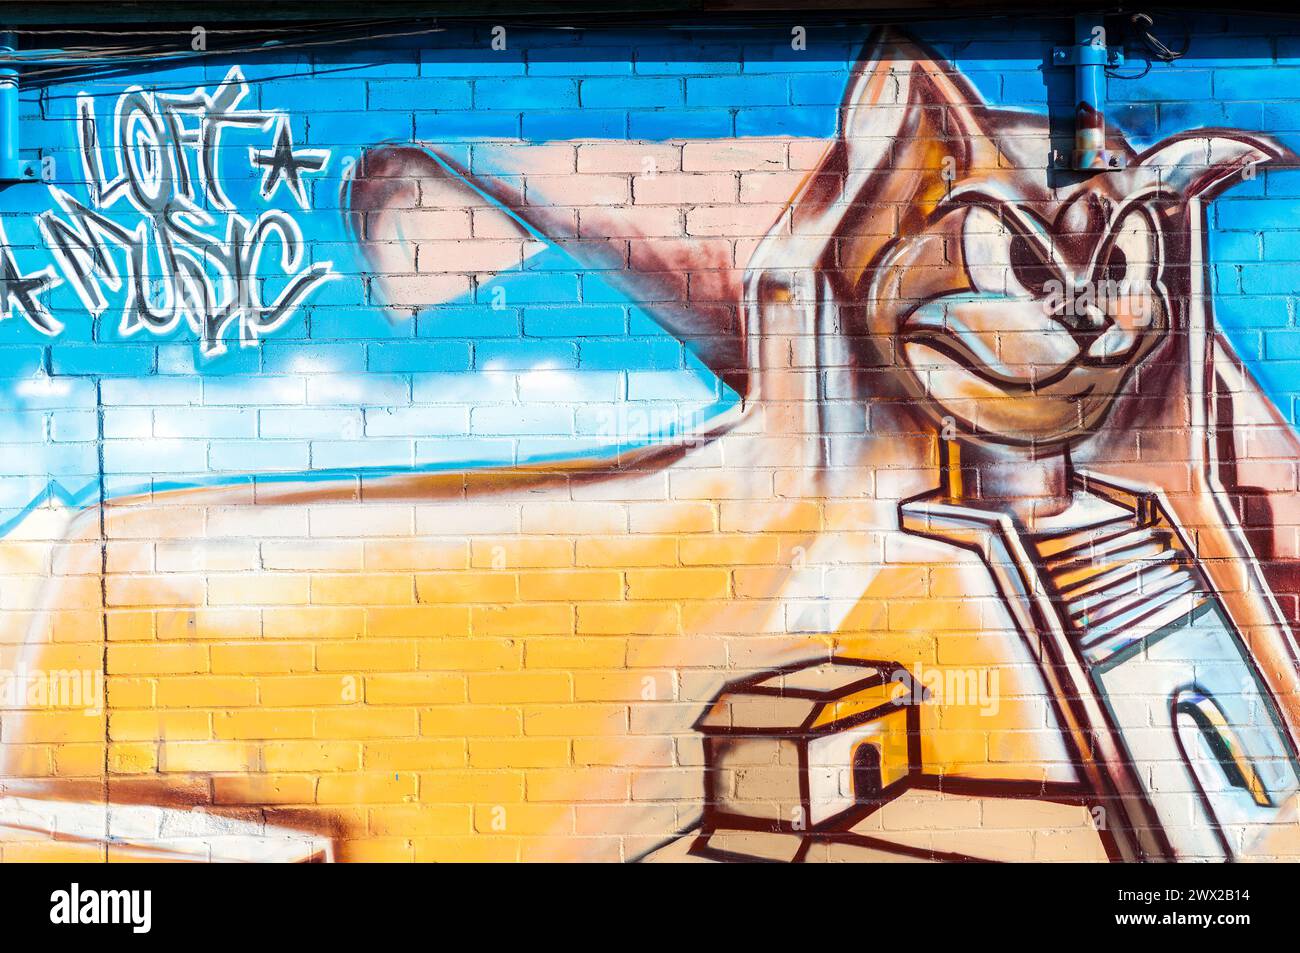 Graffiti di pittura urbana in muratura, Toronto, Canada Foto Stock